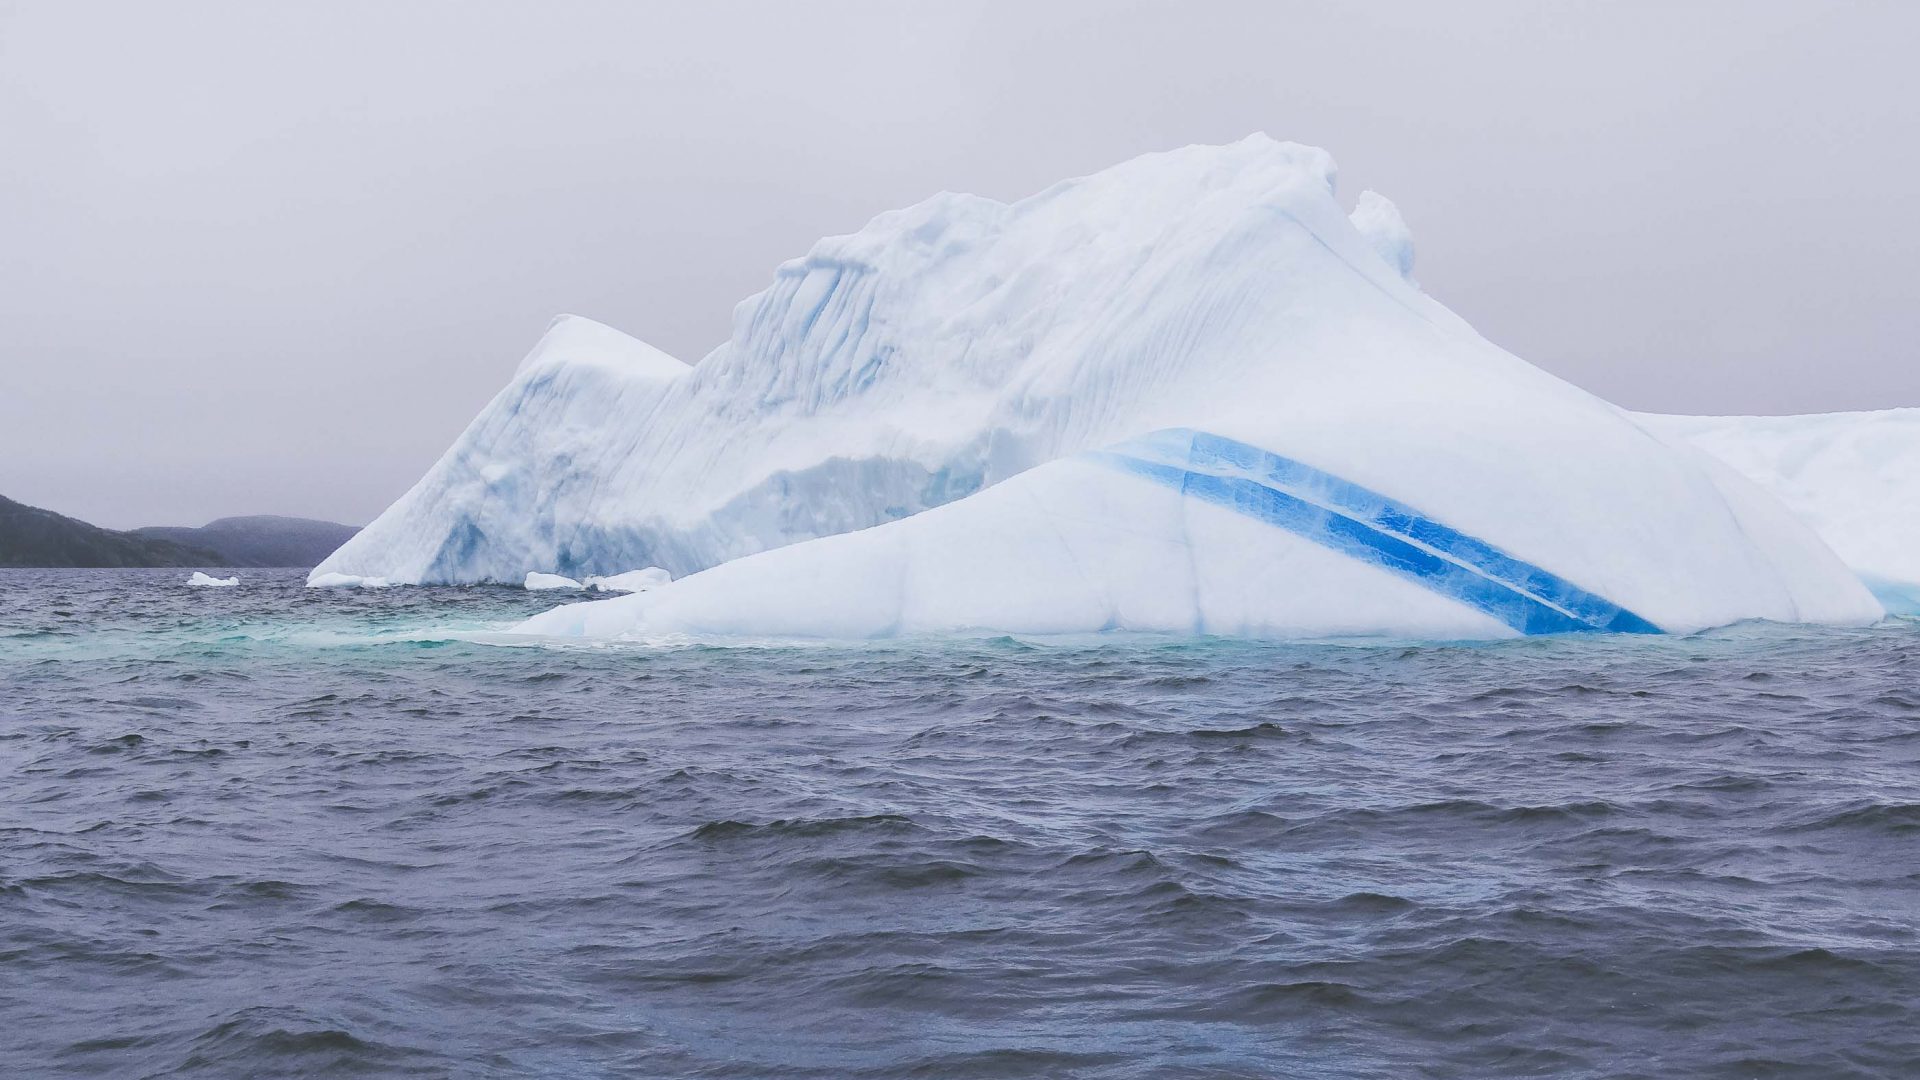 A beached iceberg in Newfoundland has rich blue veins running through it.